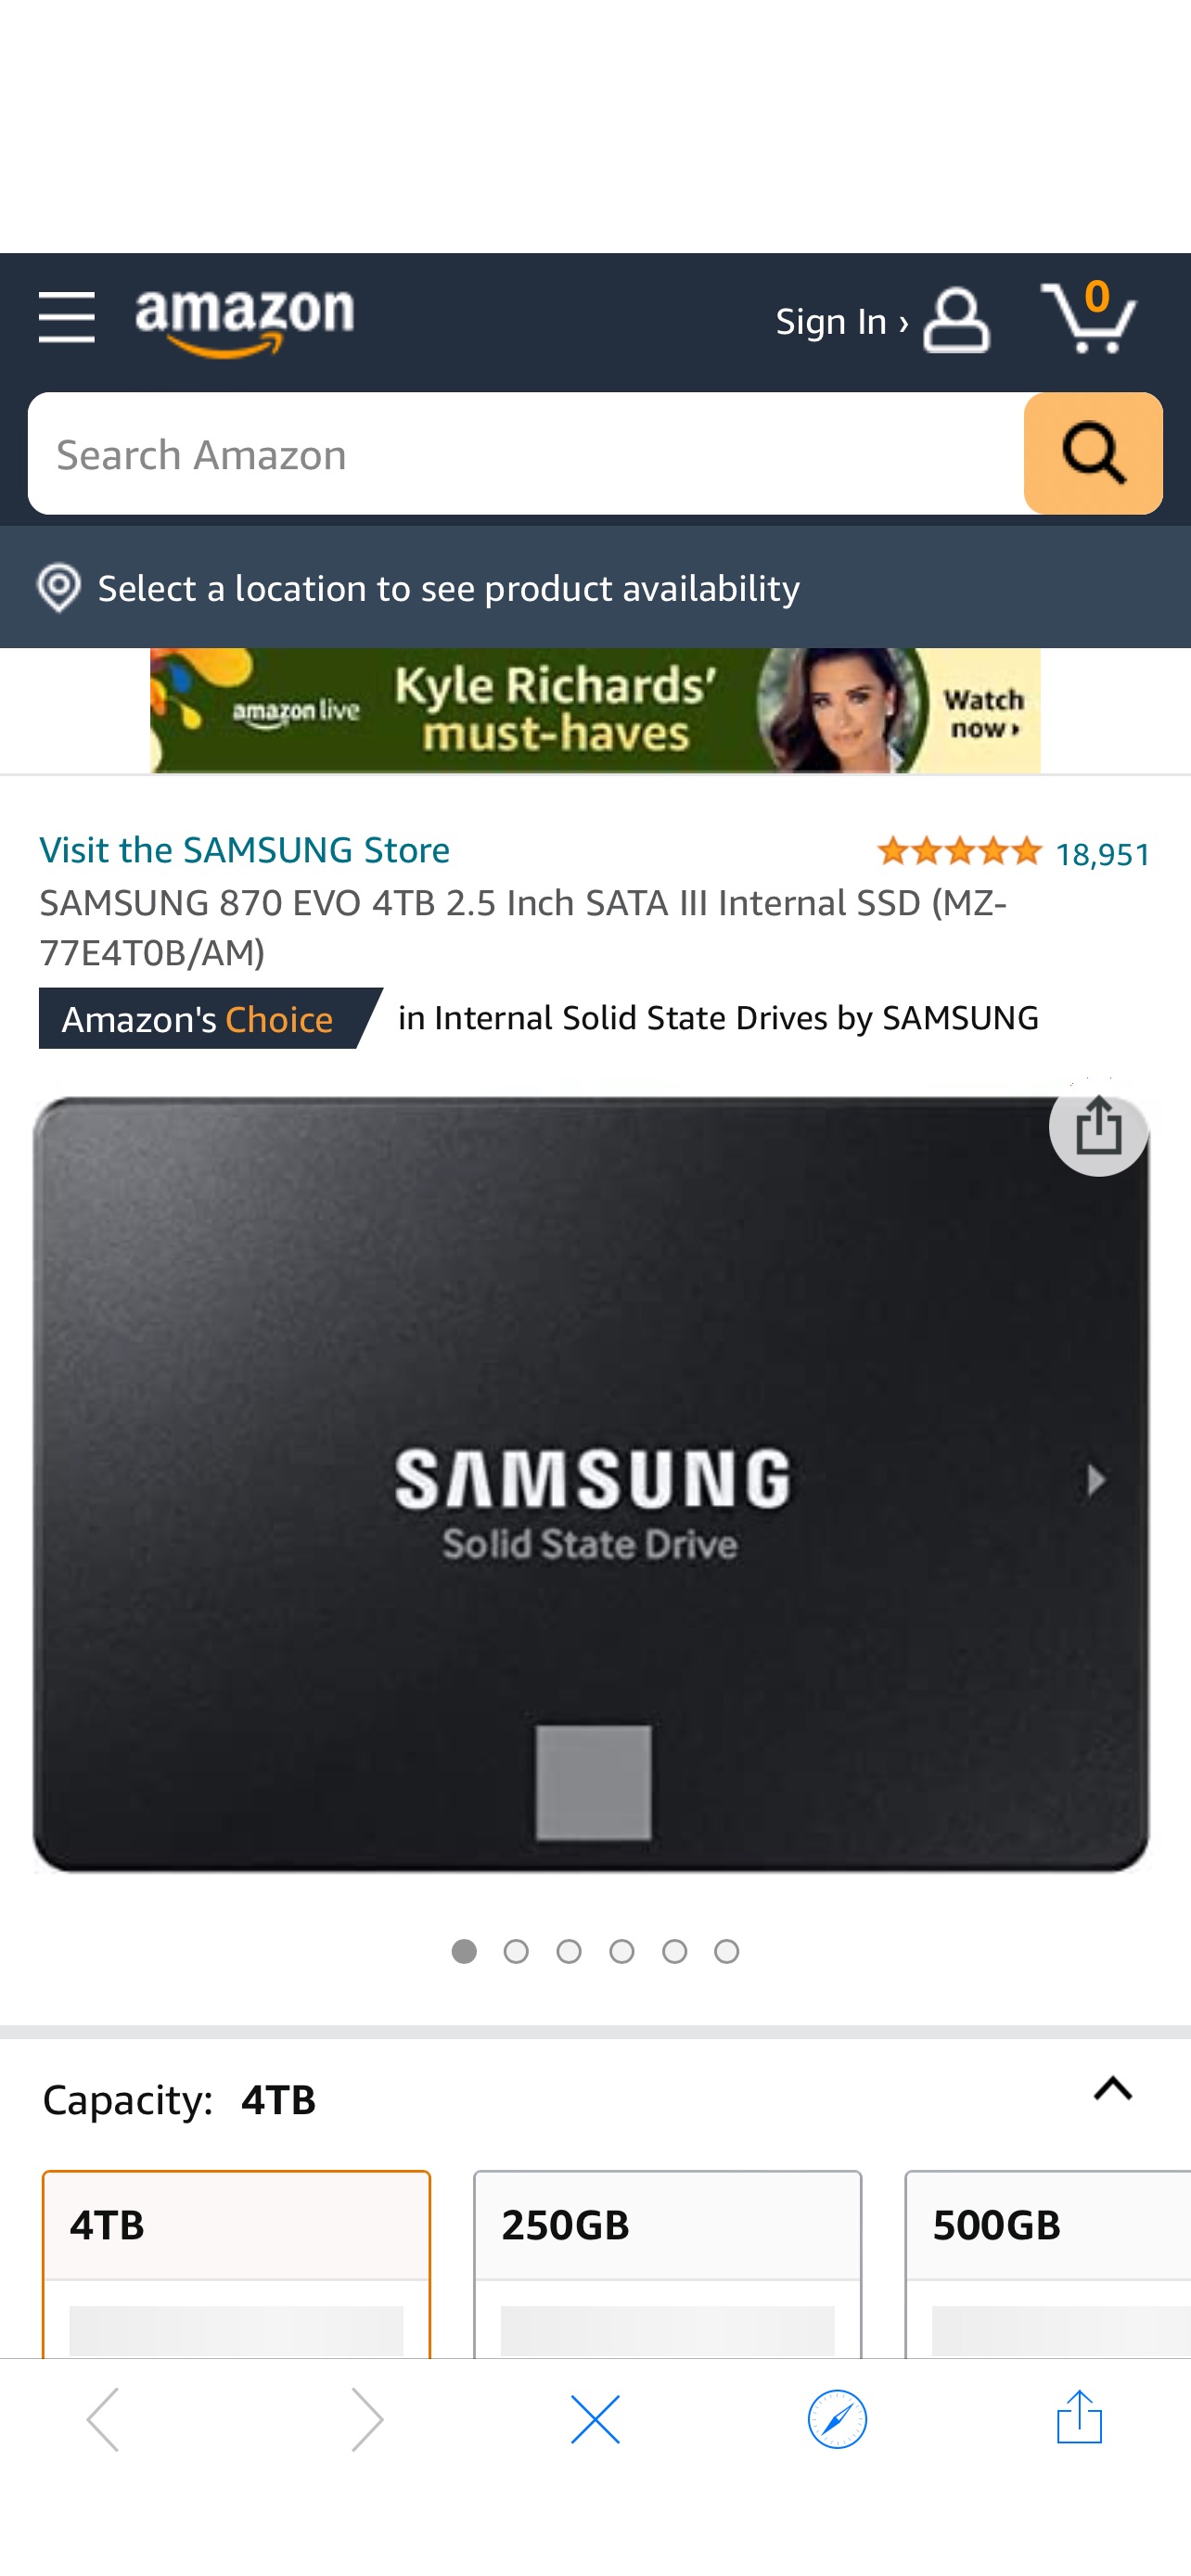 Amazon.com: SAMSUNG 870 EVO 4TB 2.5 Inch SATA III Internal SSD (MZ-77E4T0B/AM) 三星870evo 4tb固态硬盘